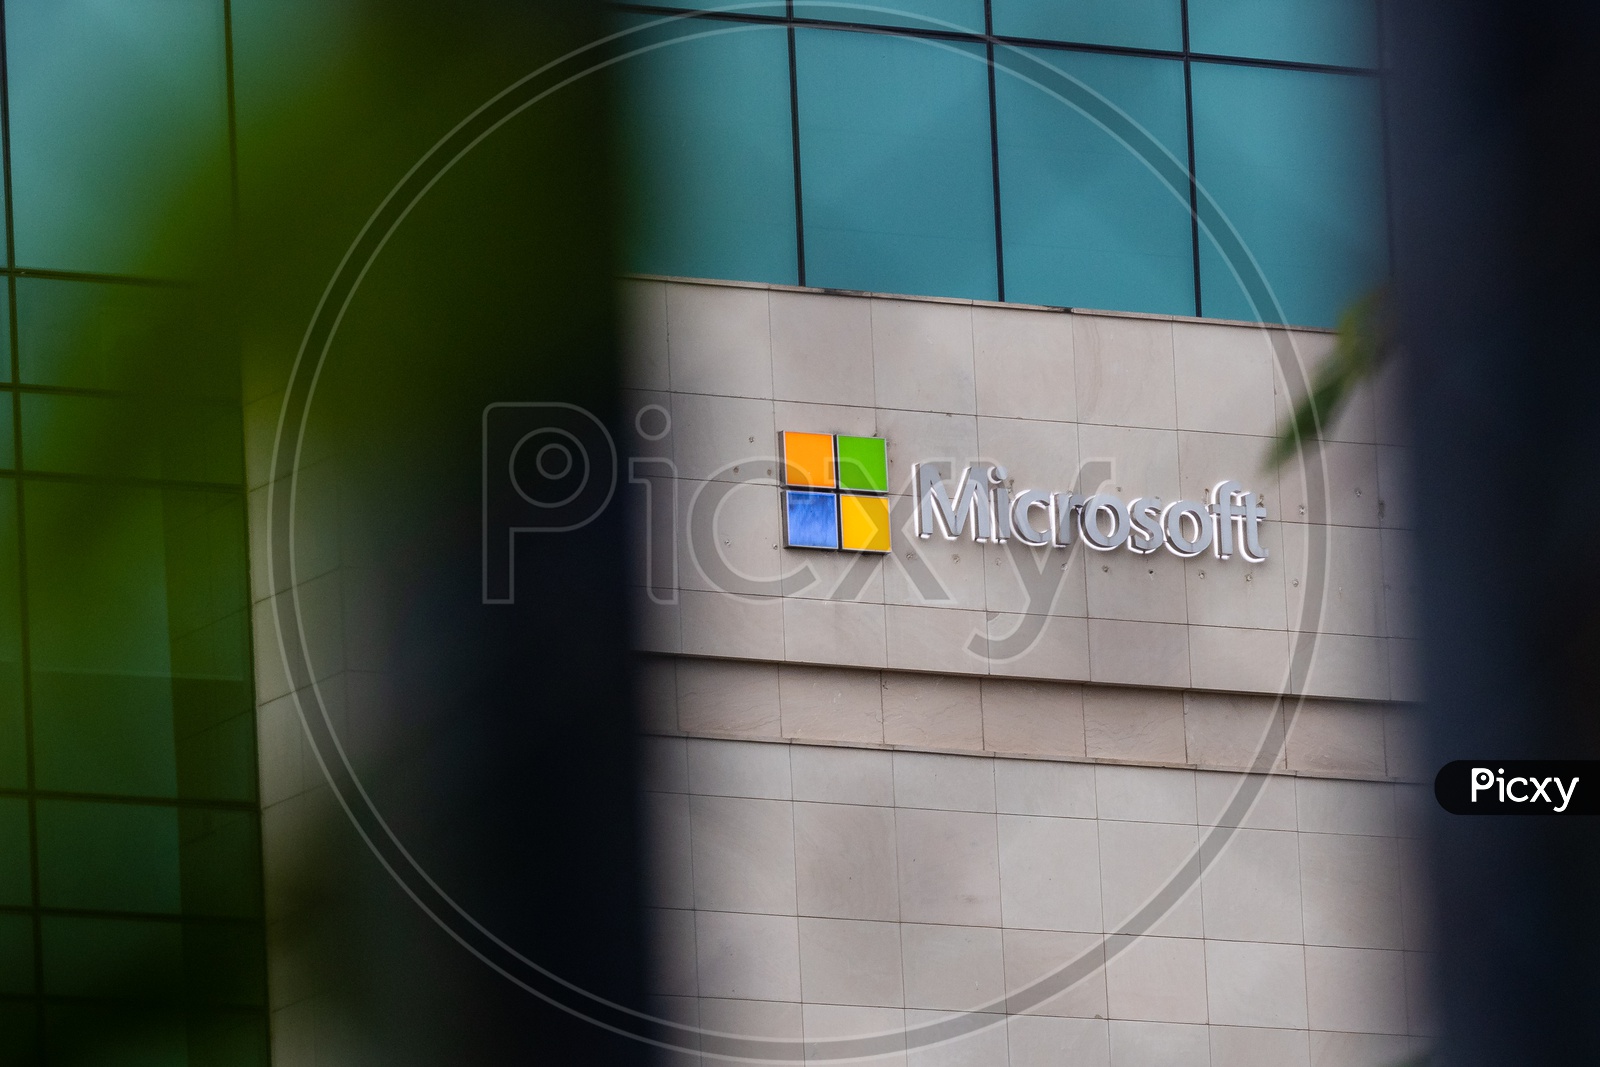 Microsoft Logo, Microsoft Campus,Financial District